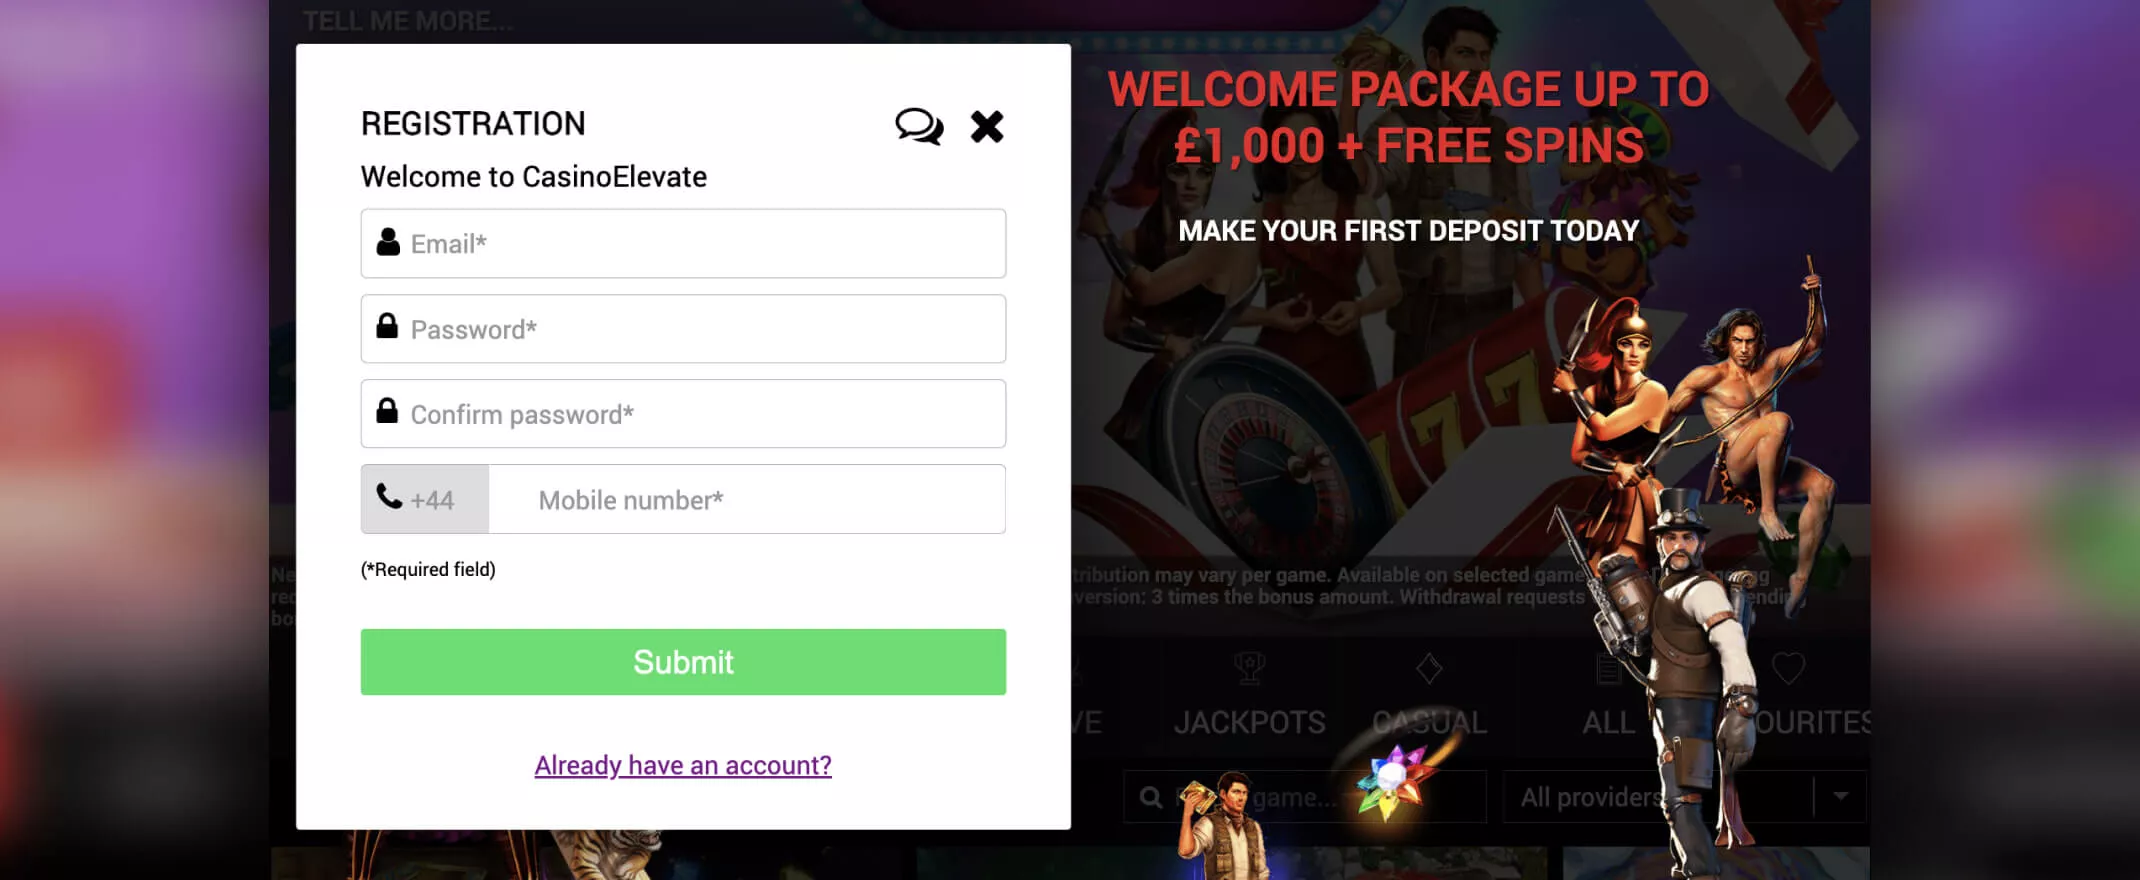 Elevate Casino screenshot of registration